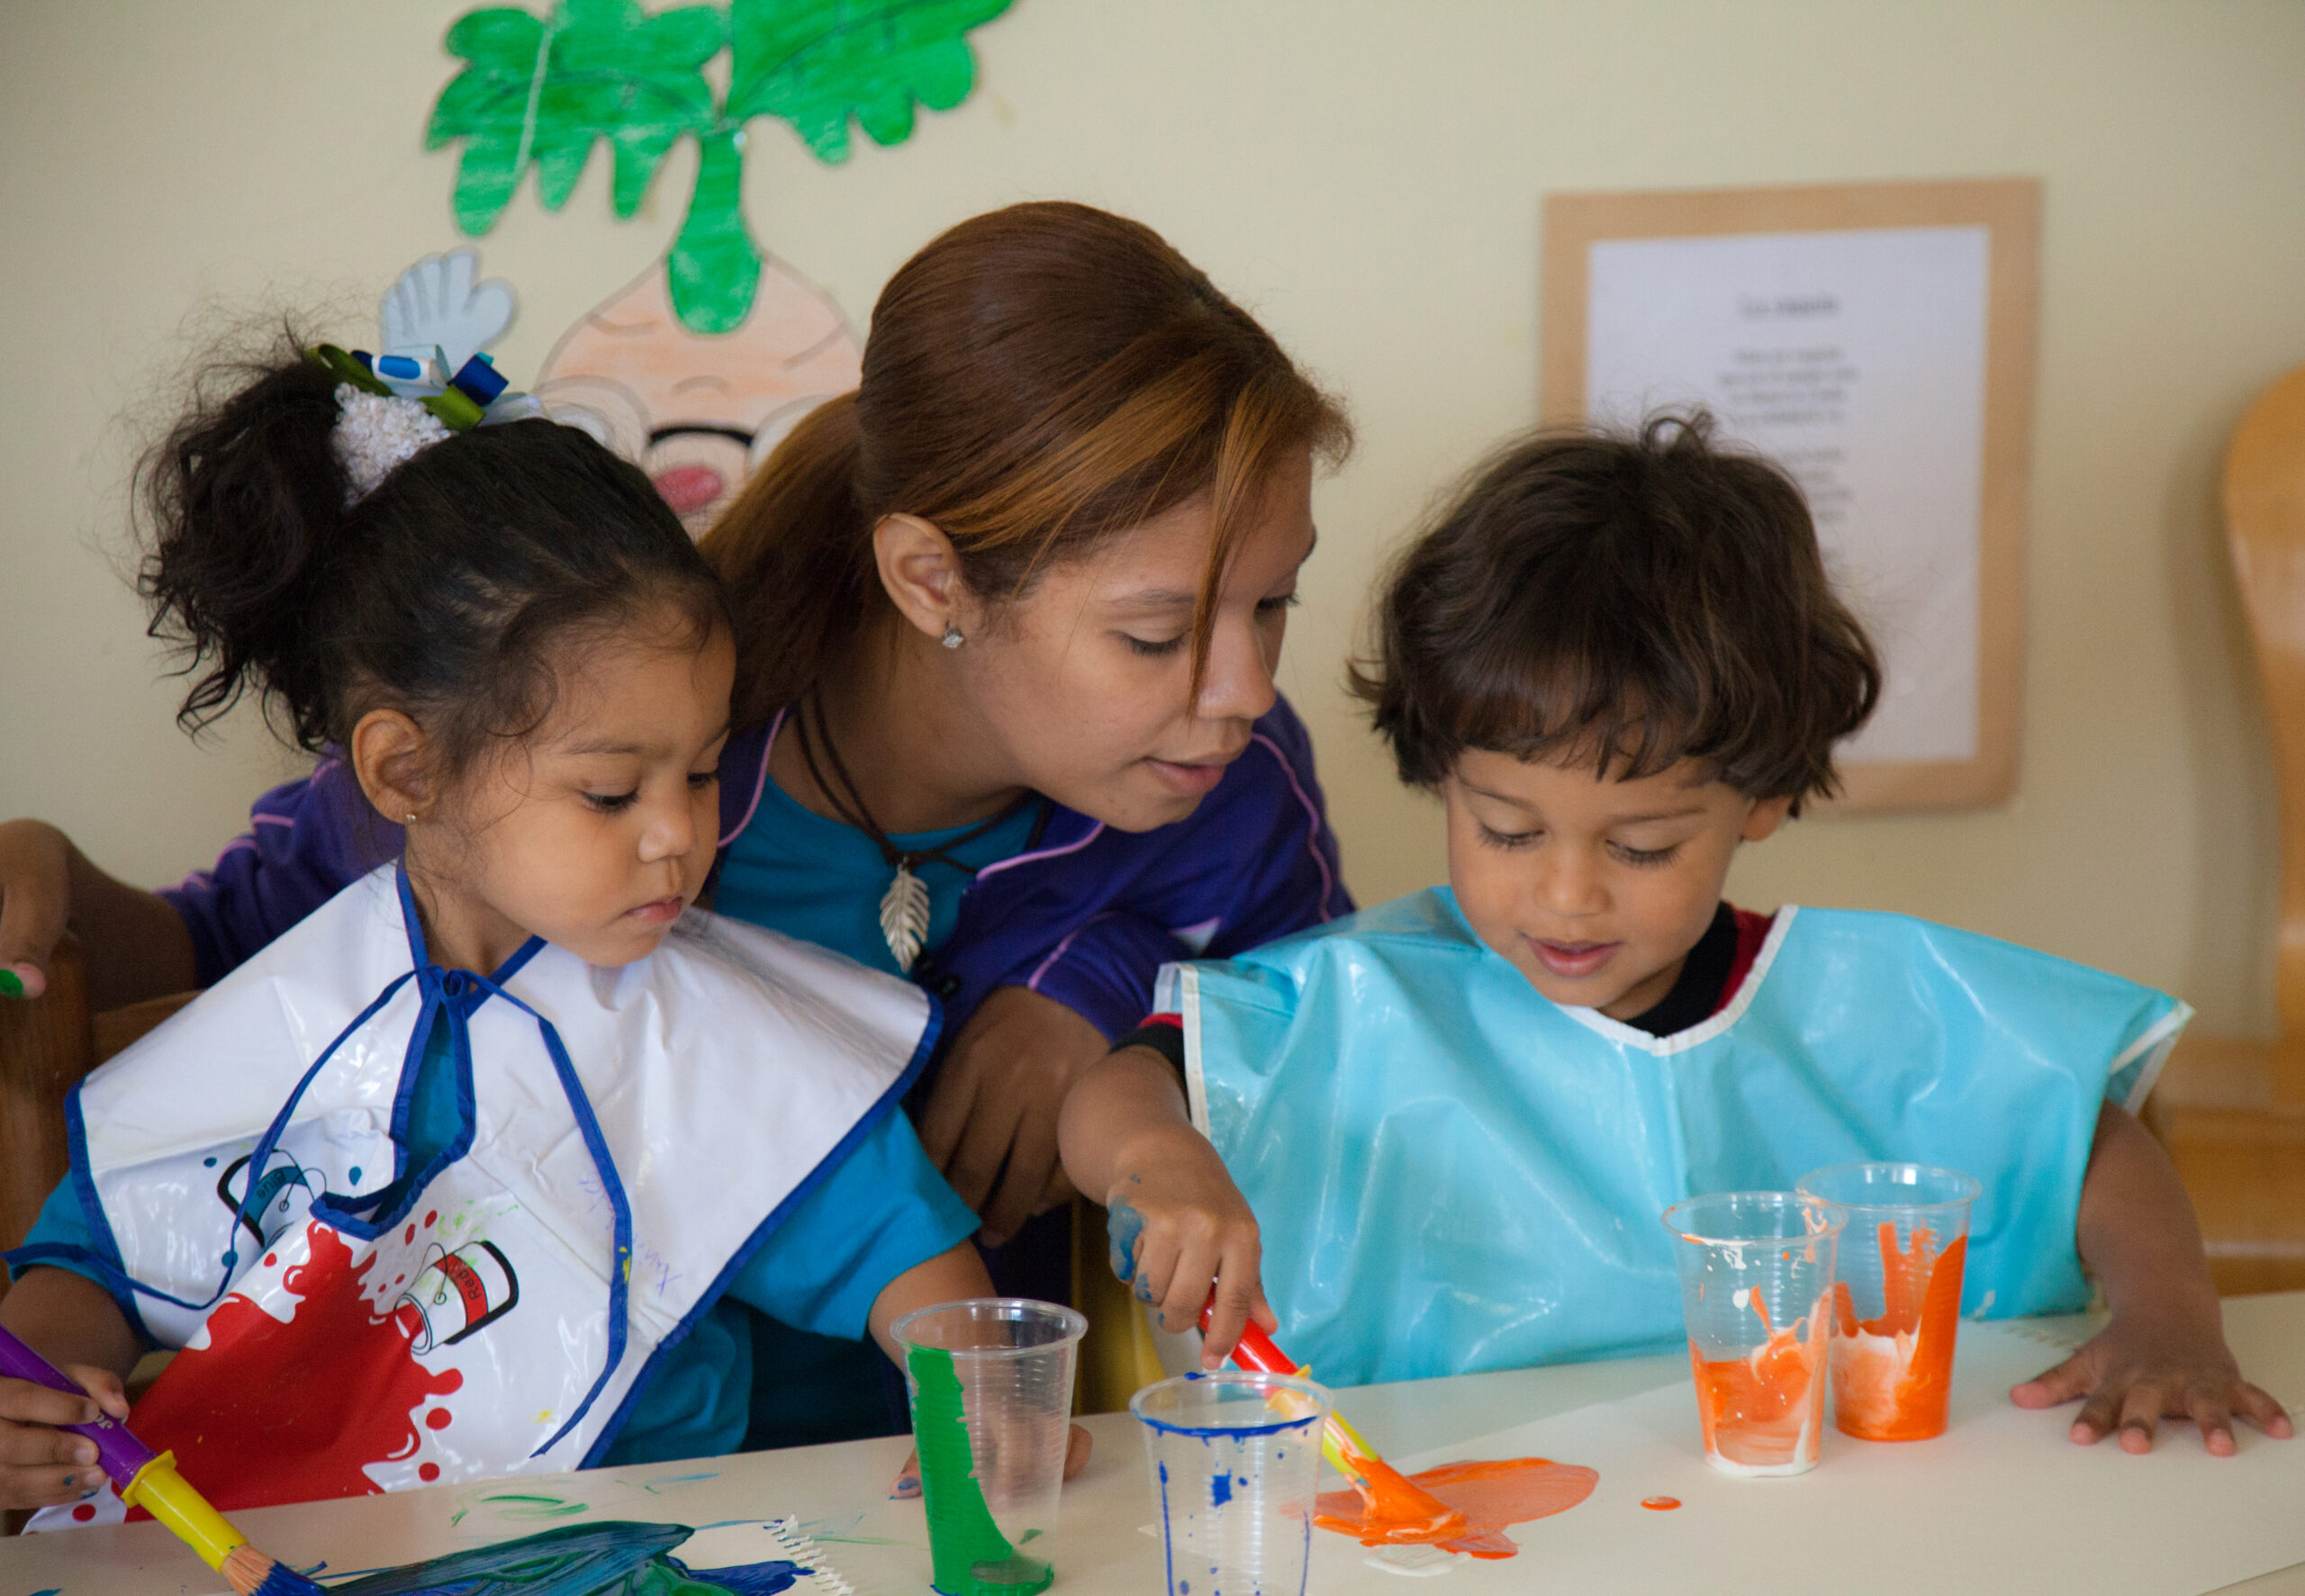 Teacher painting with children